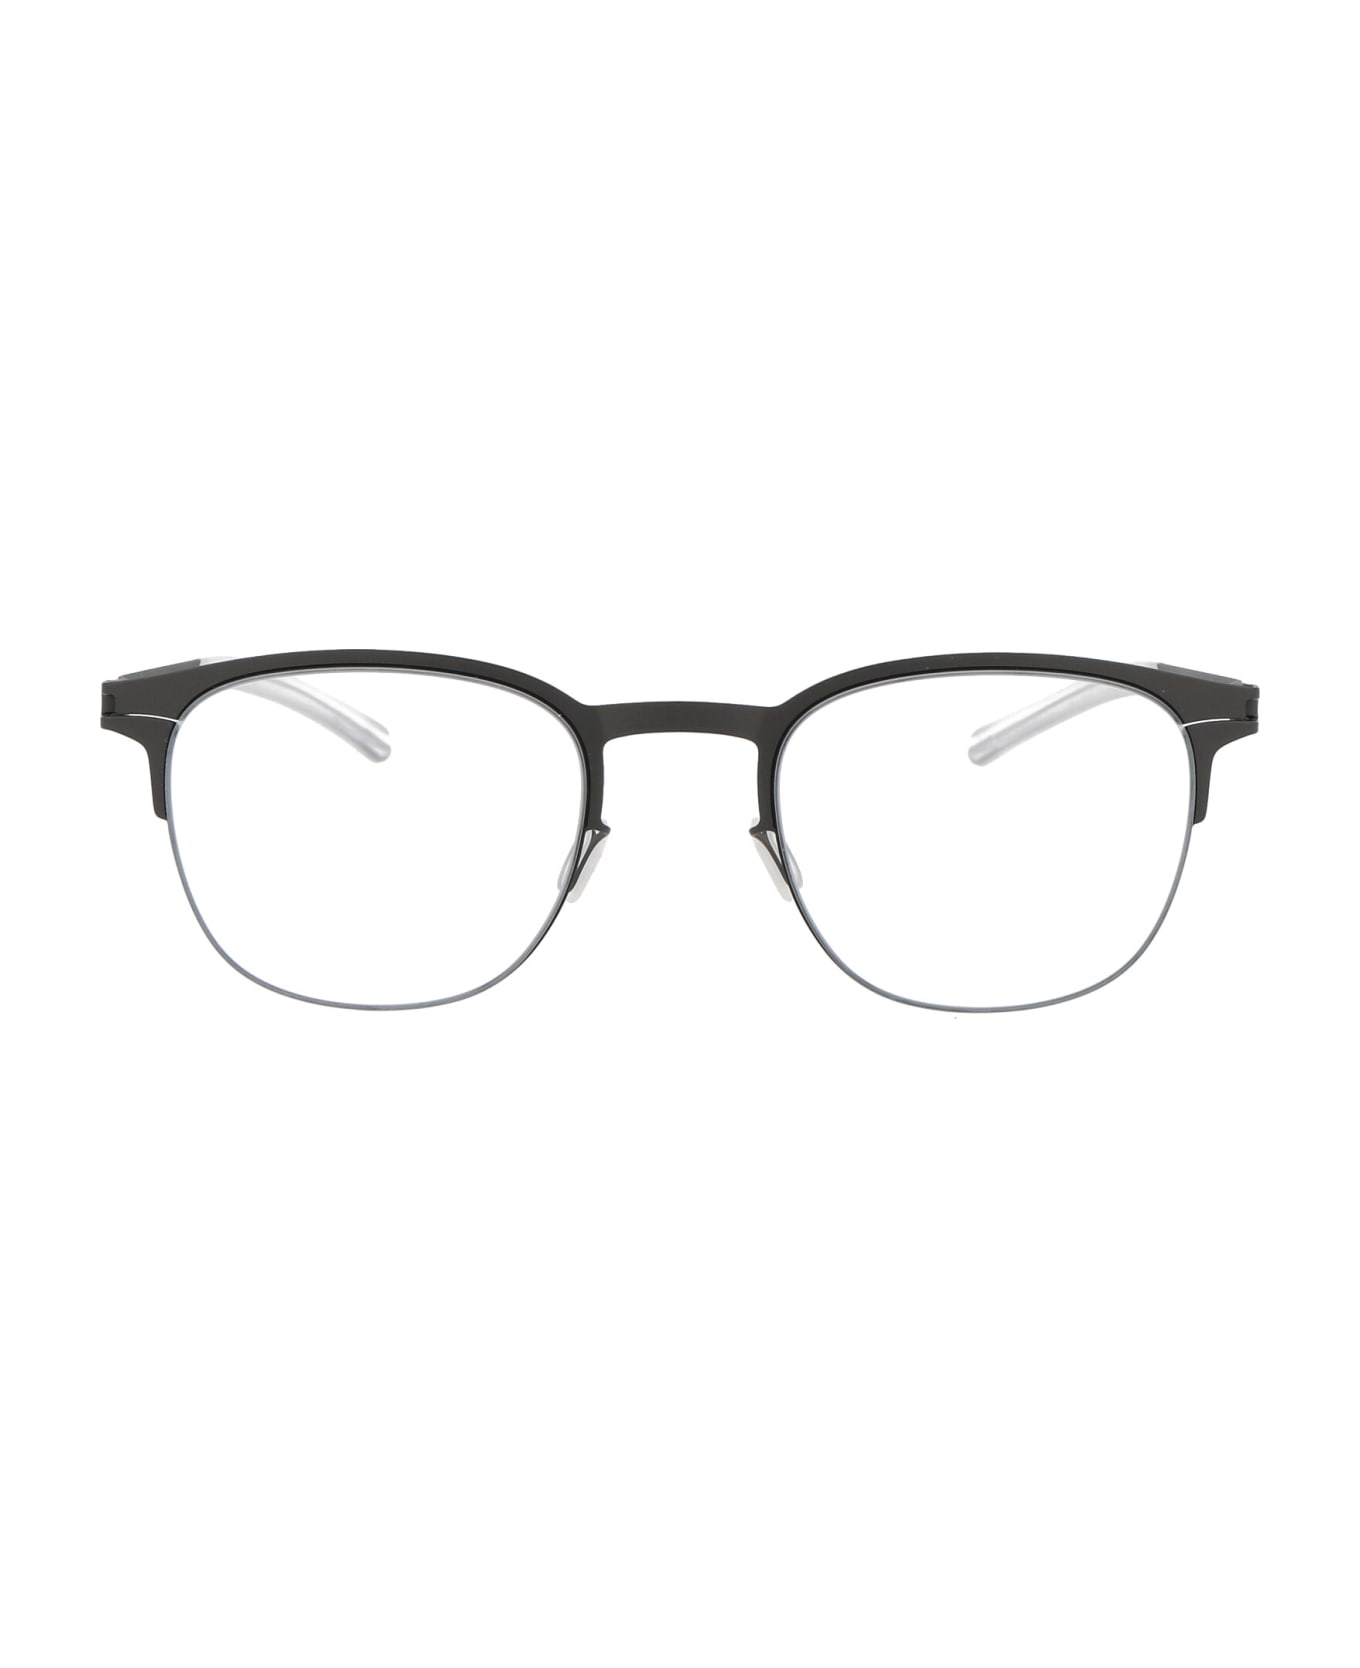 Mykita Neville Glasses - 515 Storm Grey/Black Clear アイウェア